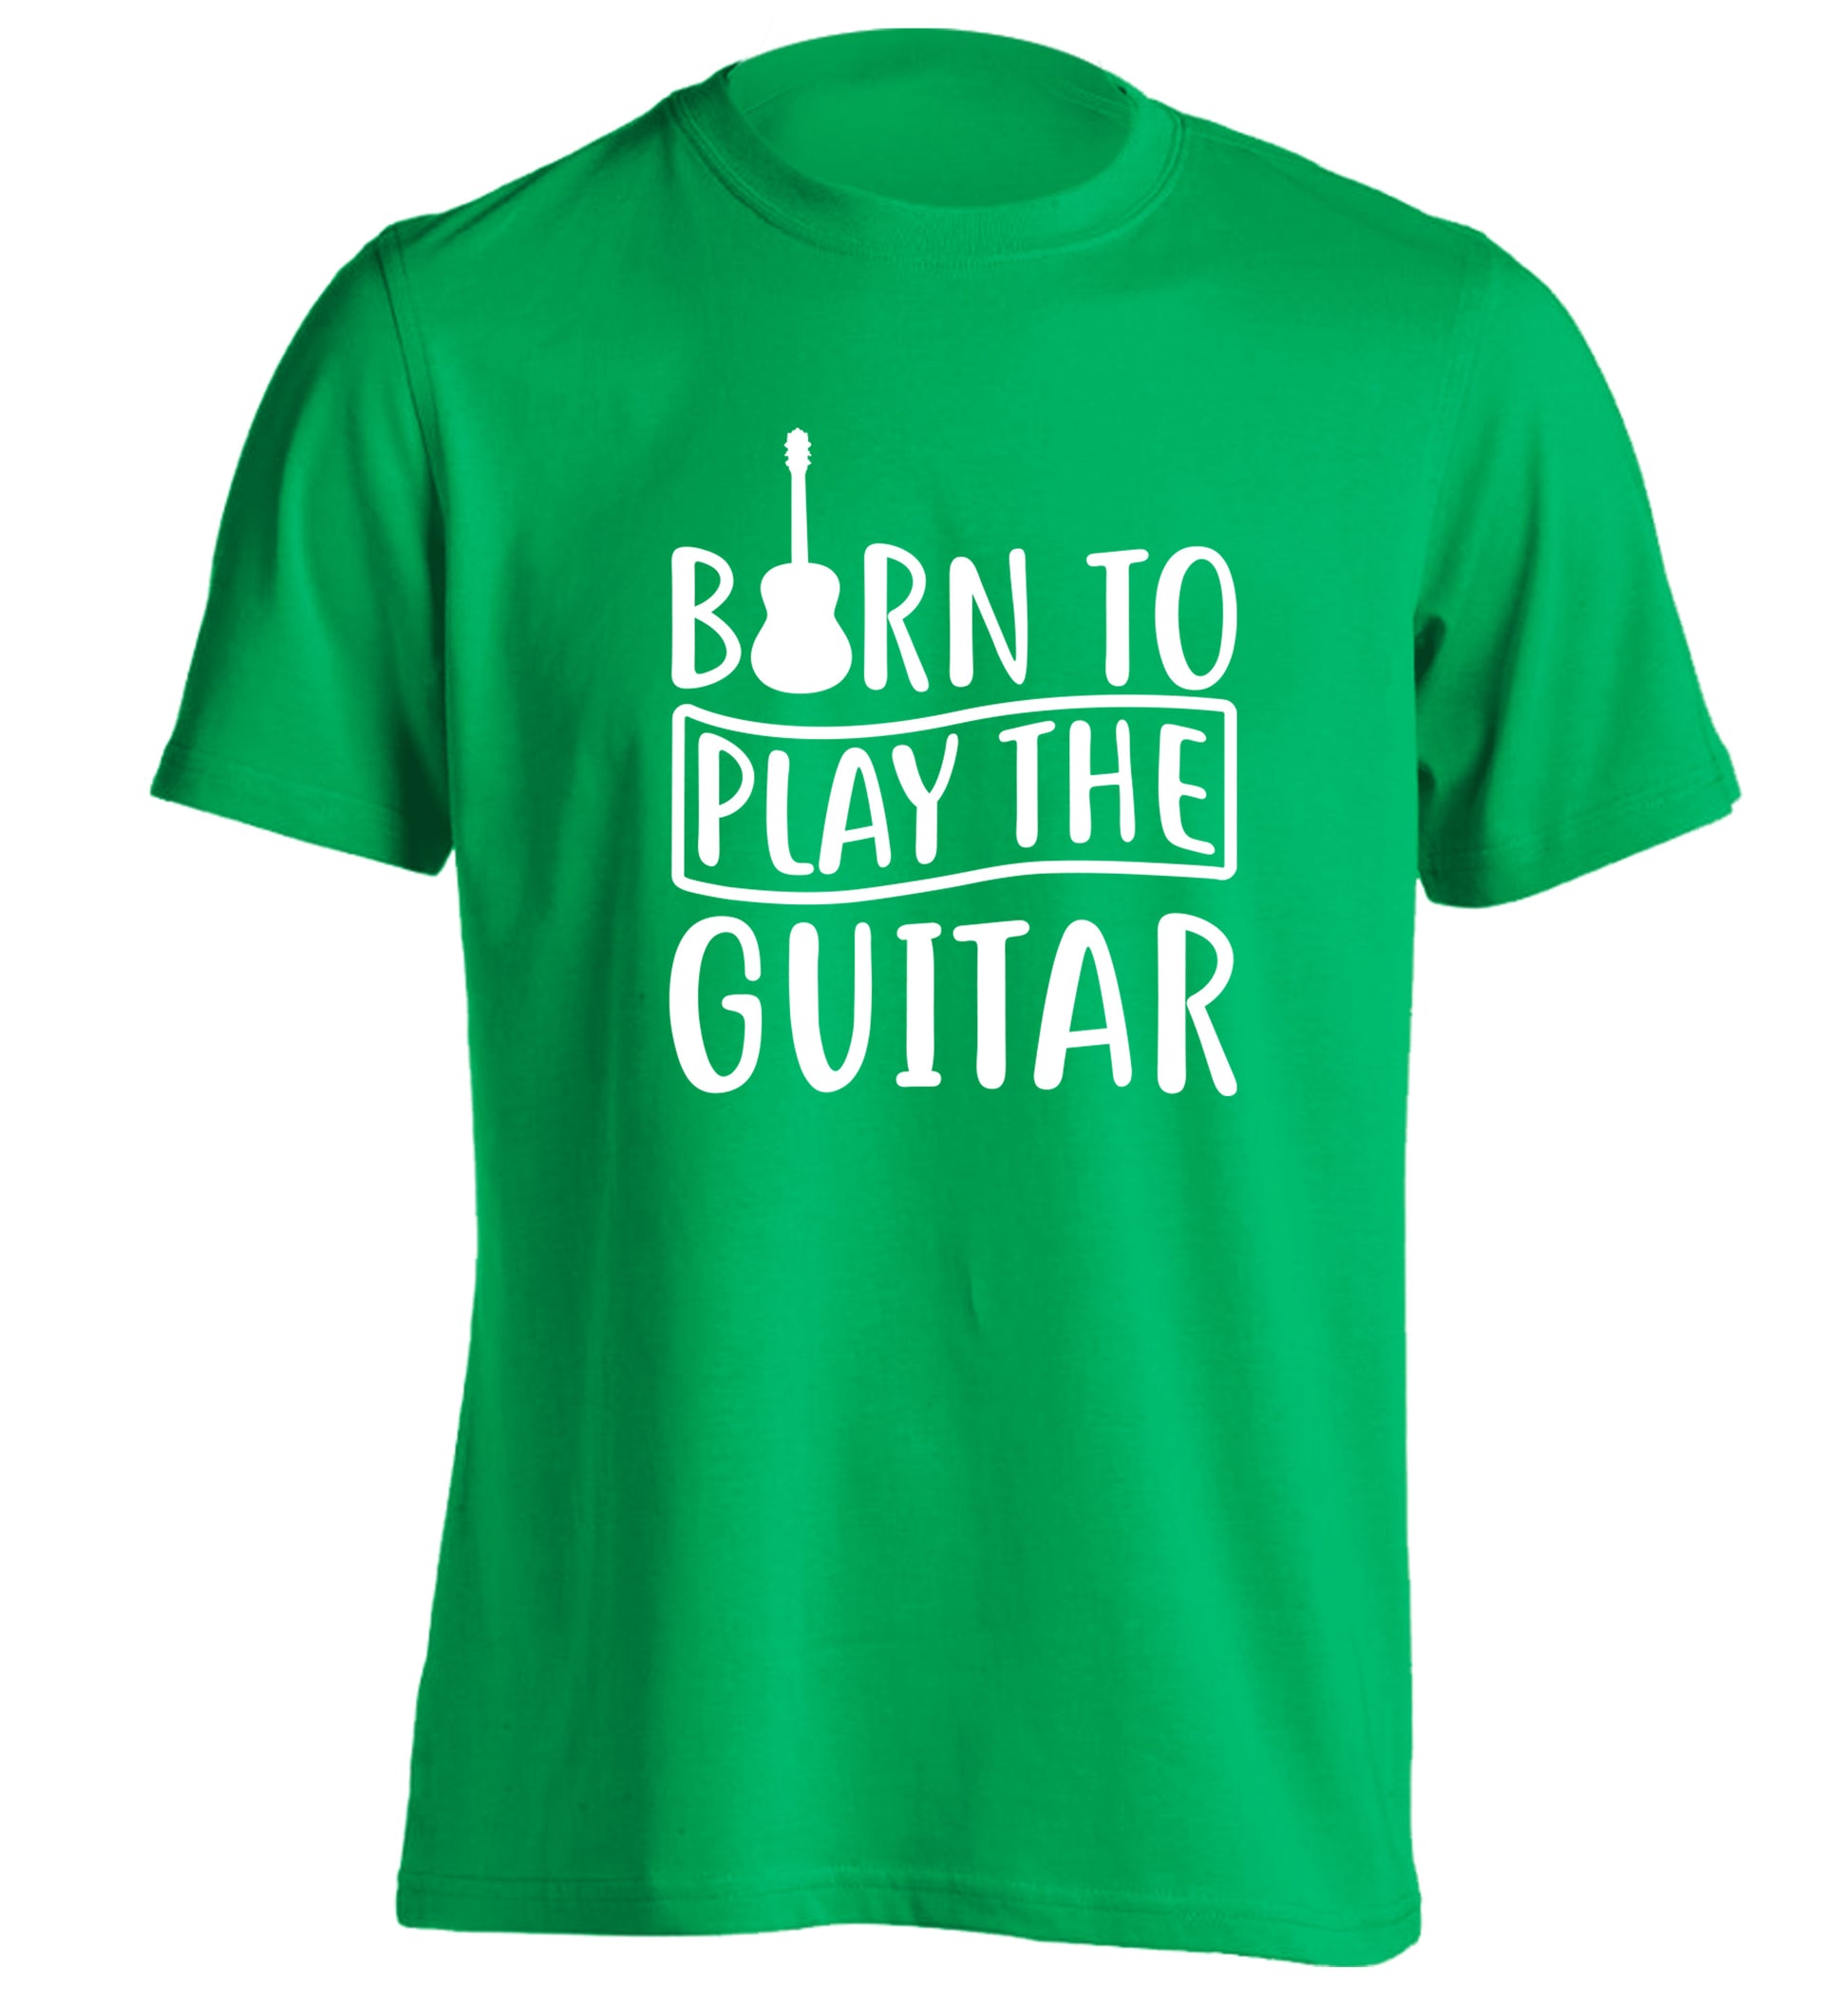 Born to play the guitar adults unisex green Tshirt 2XL